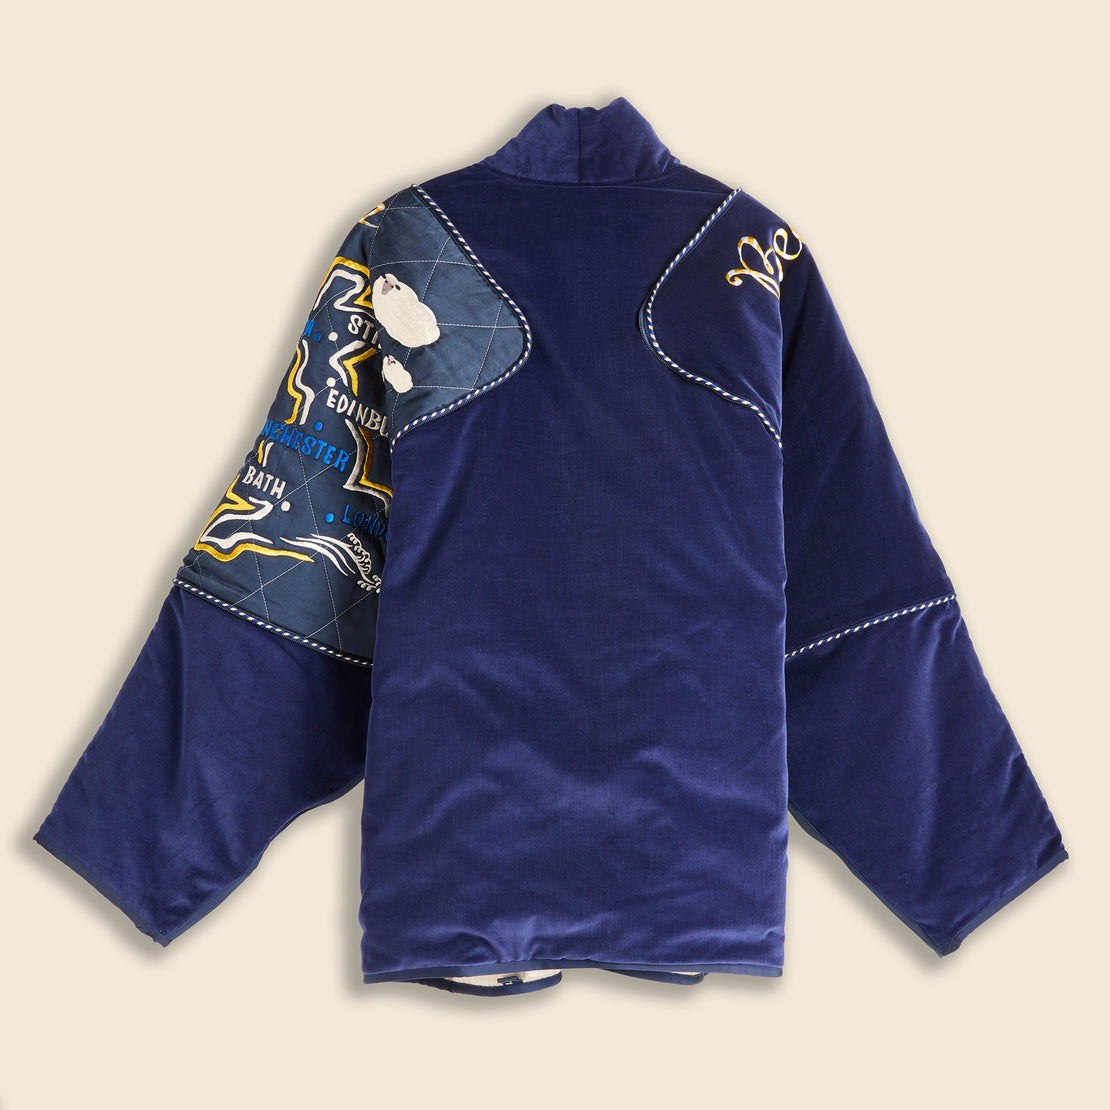 Velveteen KESA SHAM BOMBER Jacket (Beautiful QUEEN) - Navy - Kapital - STAG Provisions - W - Outerwear - Coat/Jacket